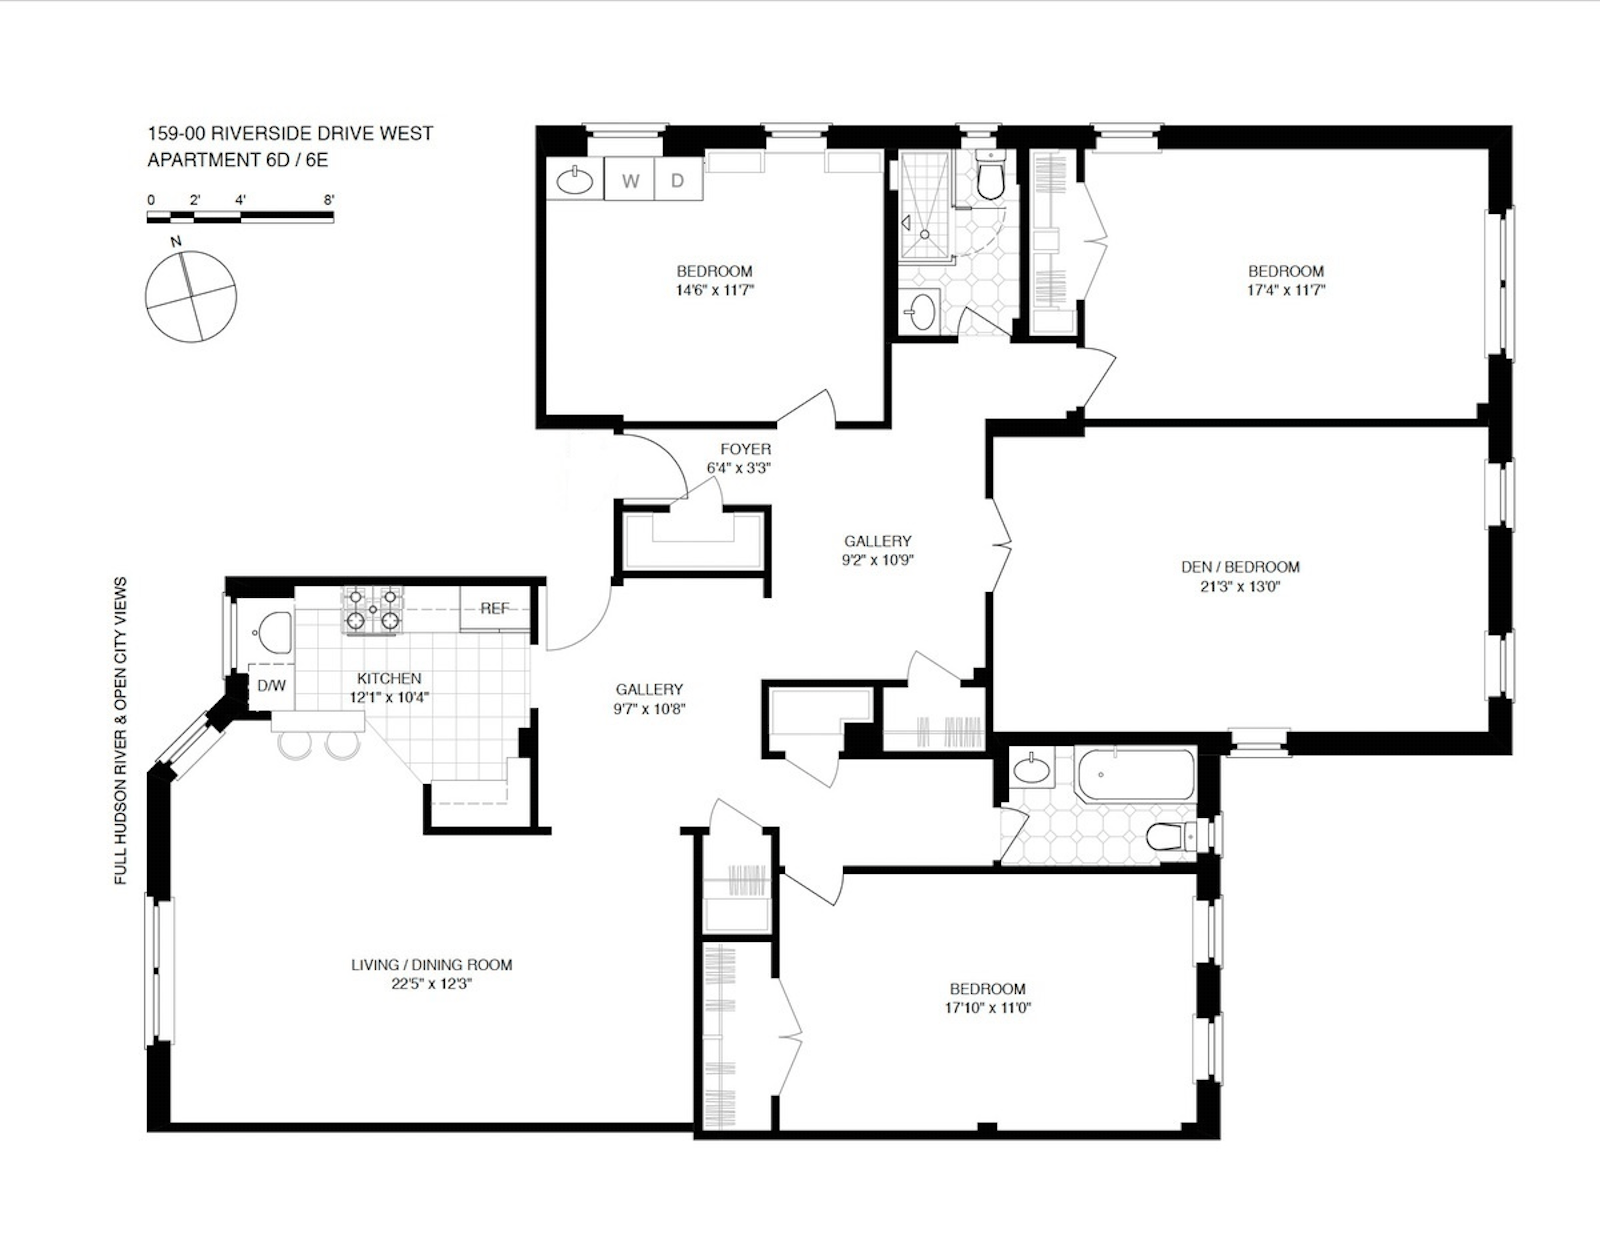 Floorplan for 159 -00 Riverside Dr W, 6D